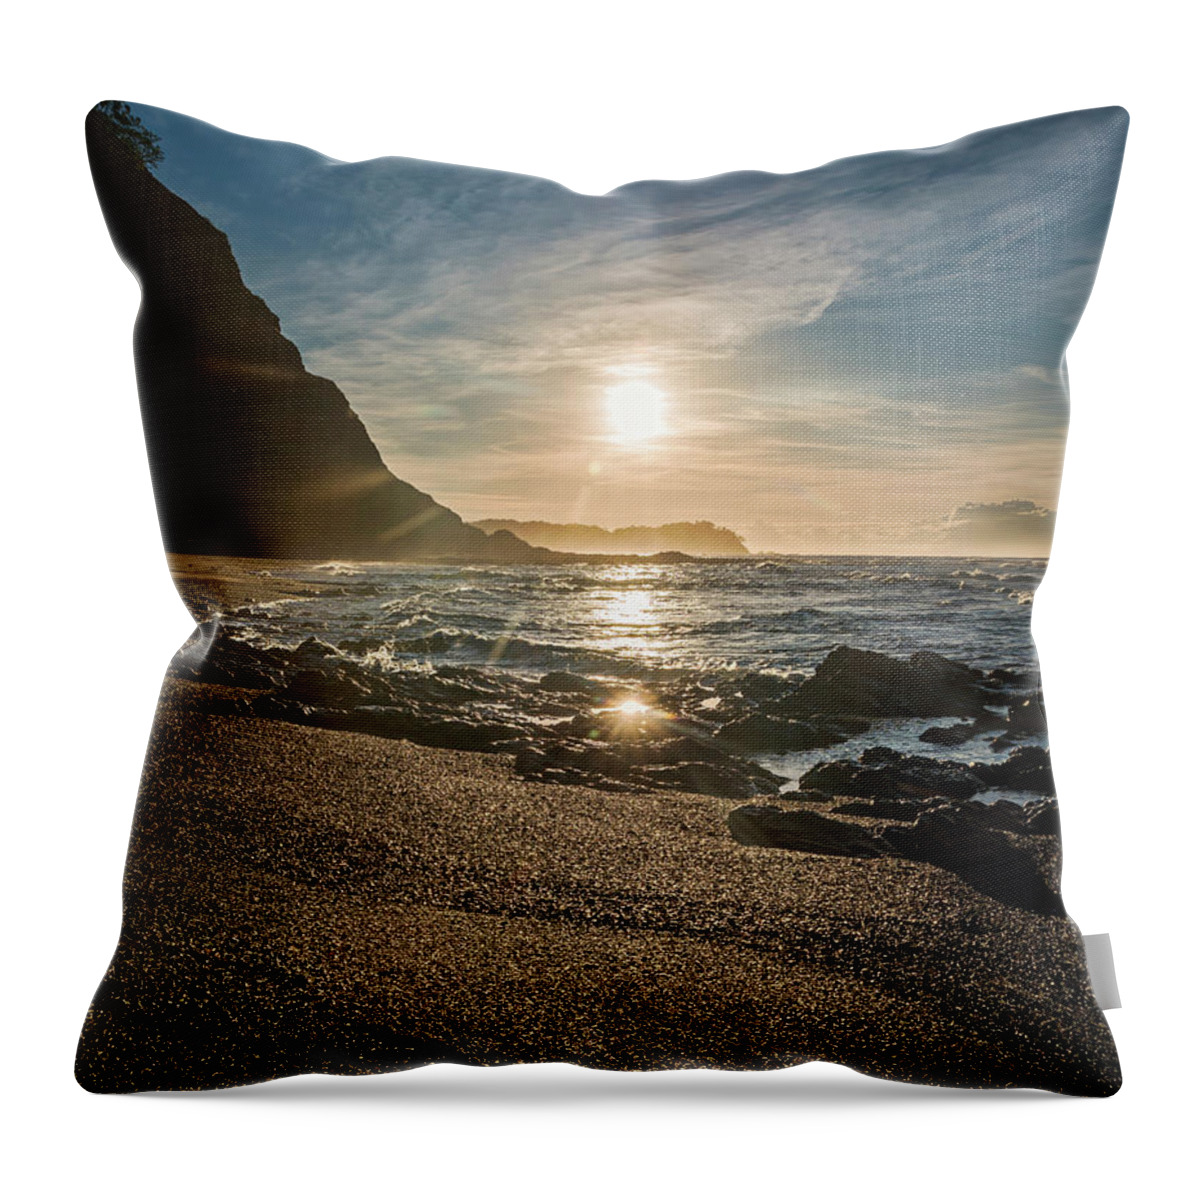 Central America Throw Pillow featuring the photograph Golden sunlight reflection on sand beach at Punta Samara by Henri Leduc